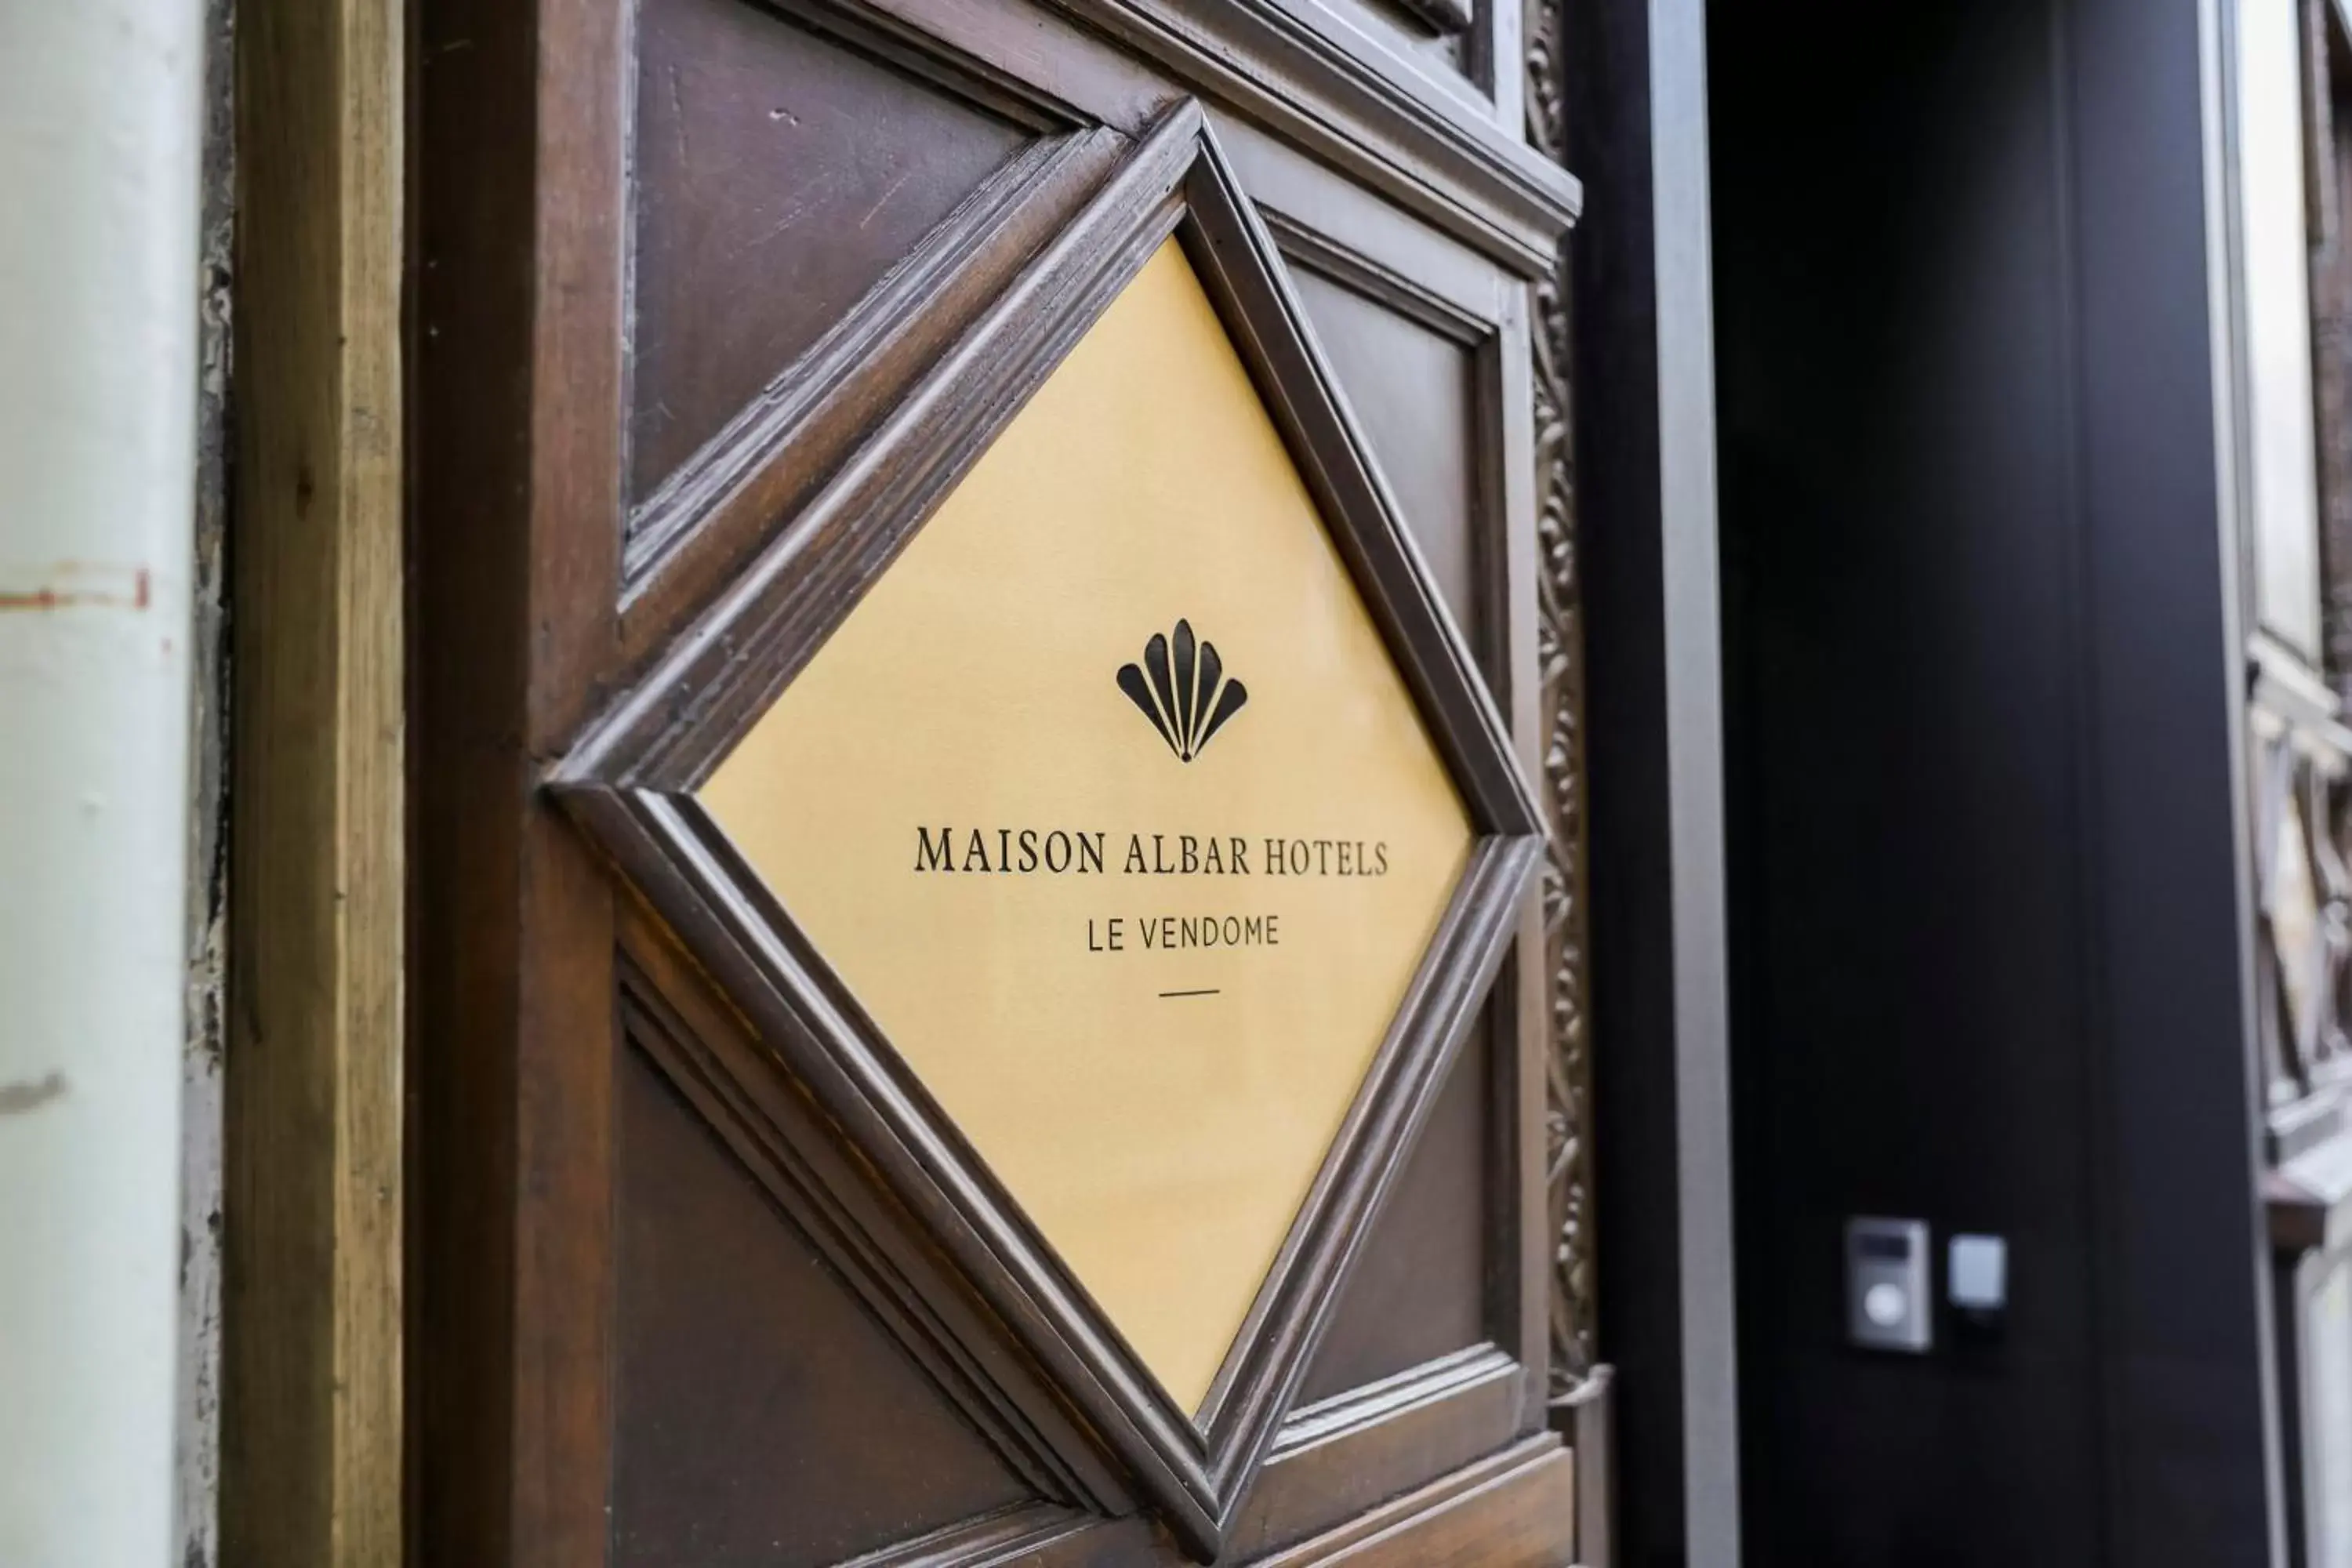 Property logo or sign in Maison Albar Hotels - Le Vendome